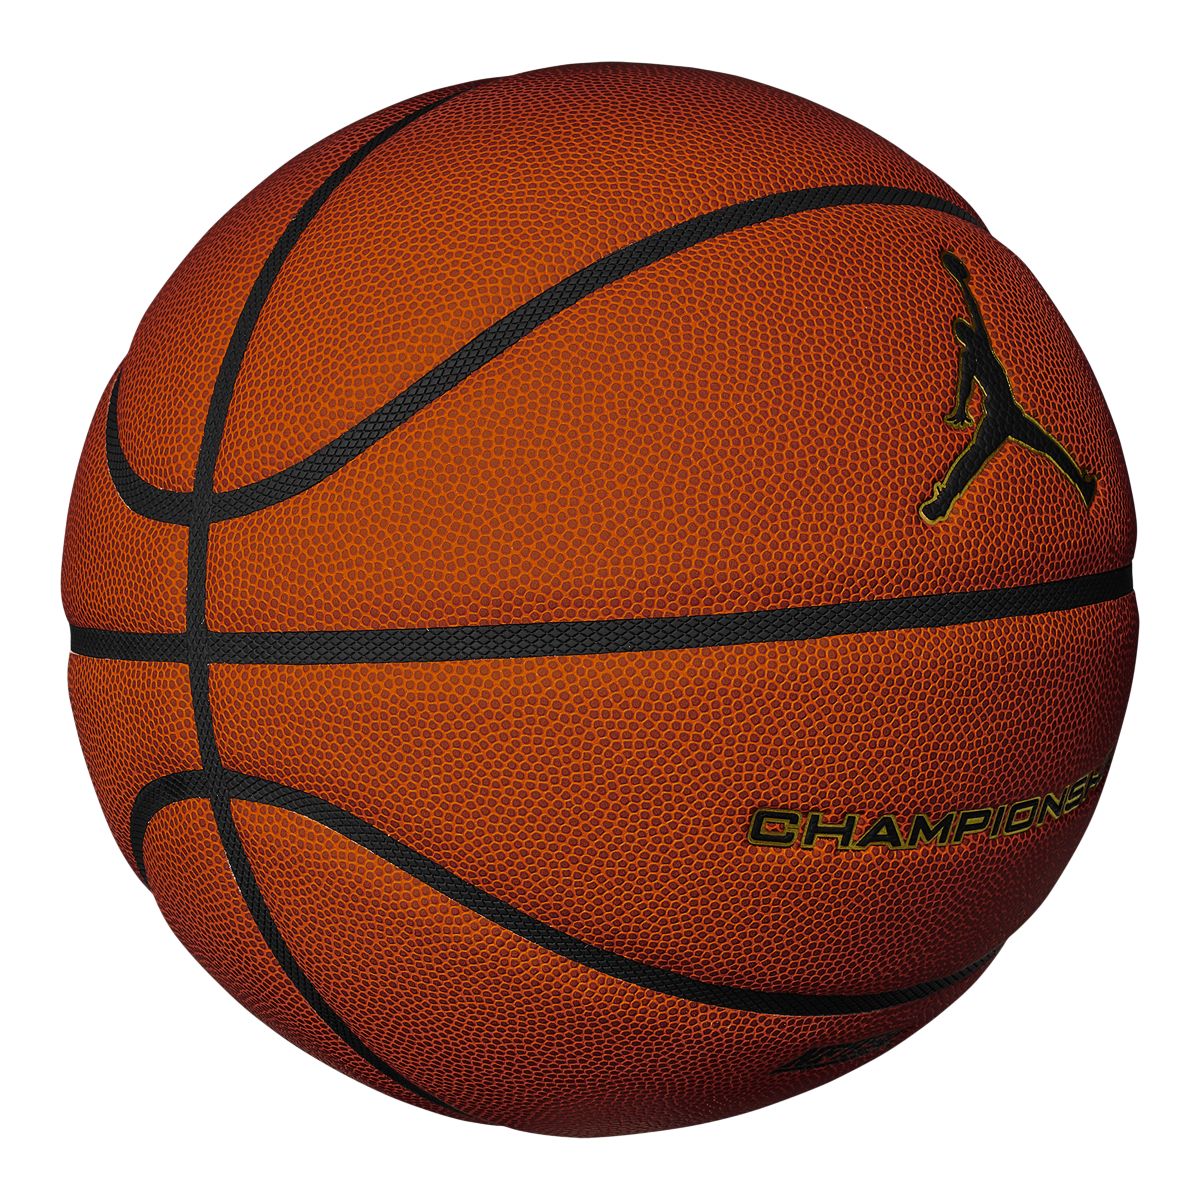 Image of Jordan Championship Basketball - Size 7